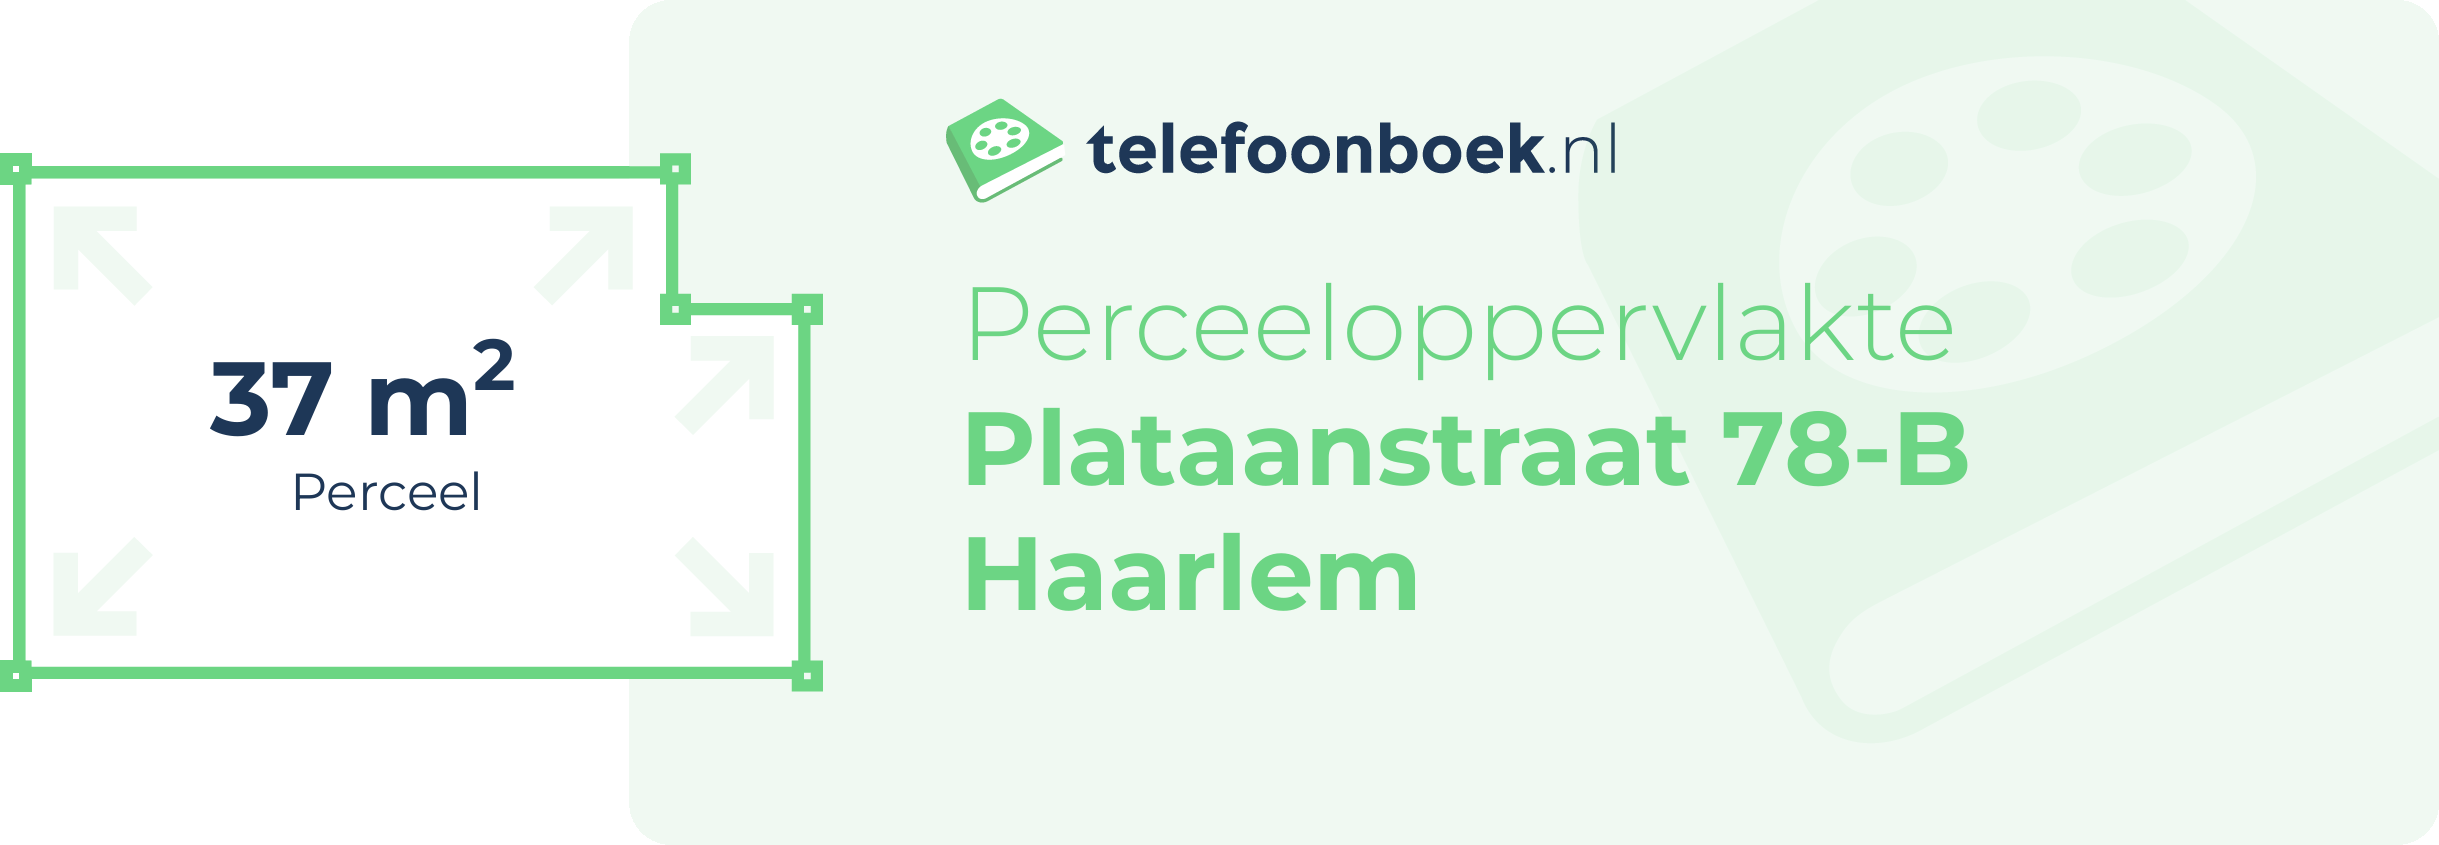 Perceeloppervlakte Plataanstraat 78-B Haarlem